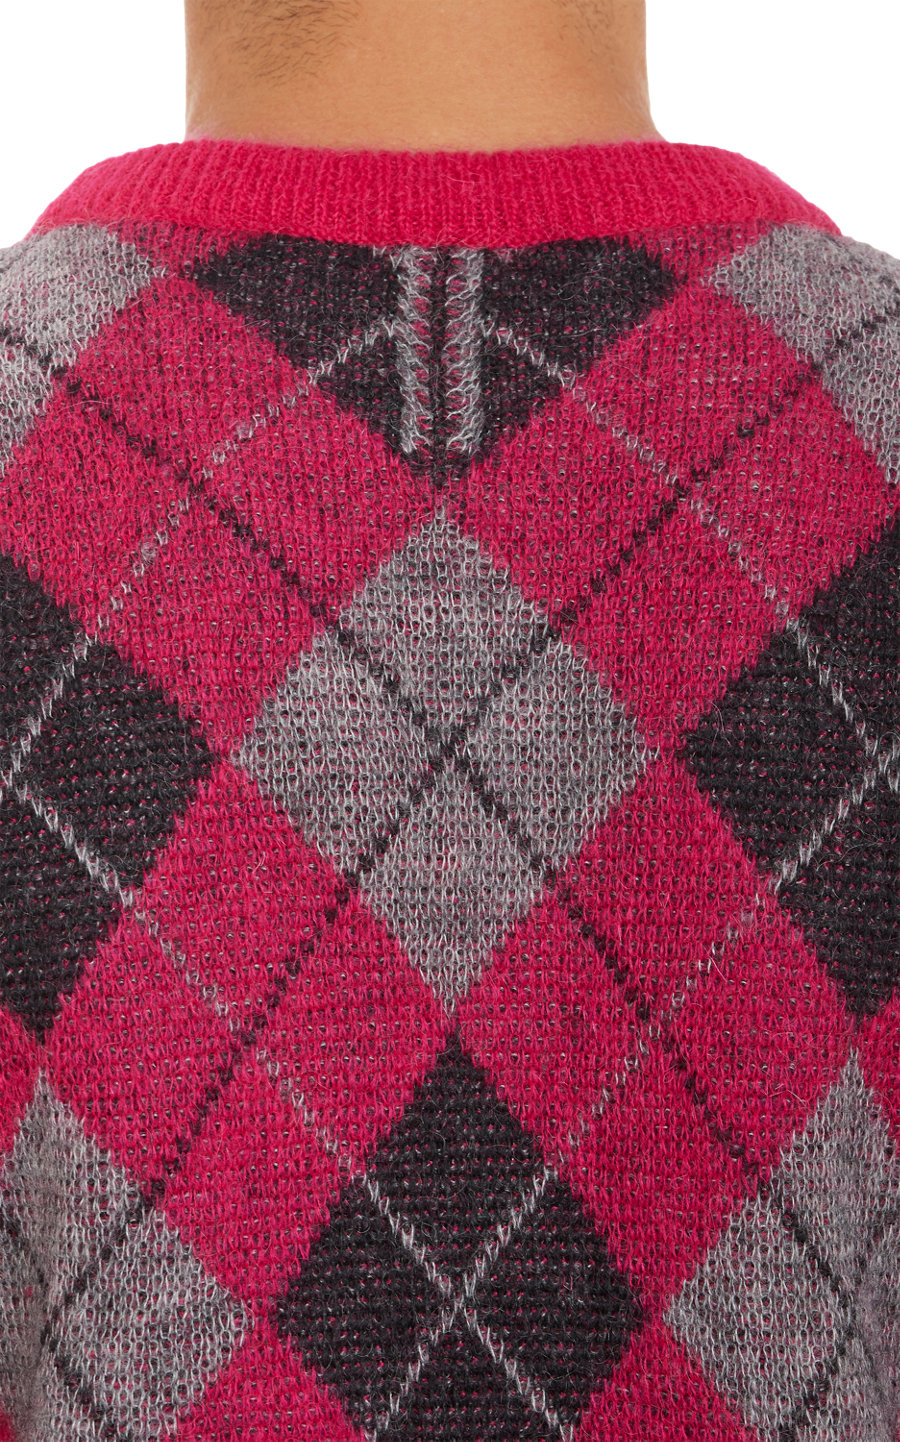 Lyst - Saint Laurent Argyle Sweater in Pink for Men